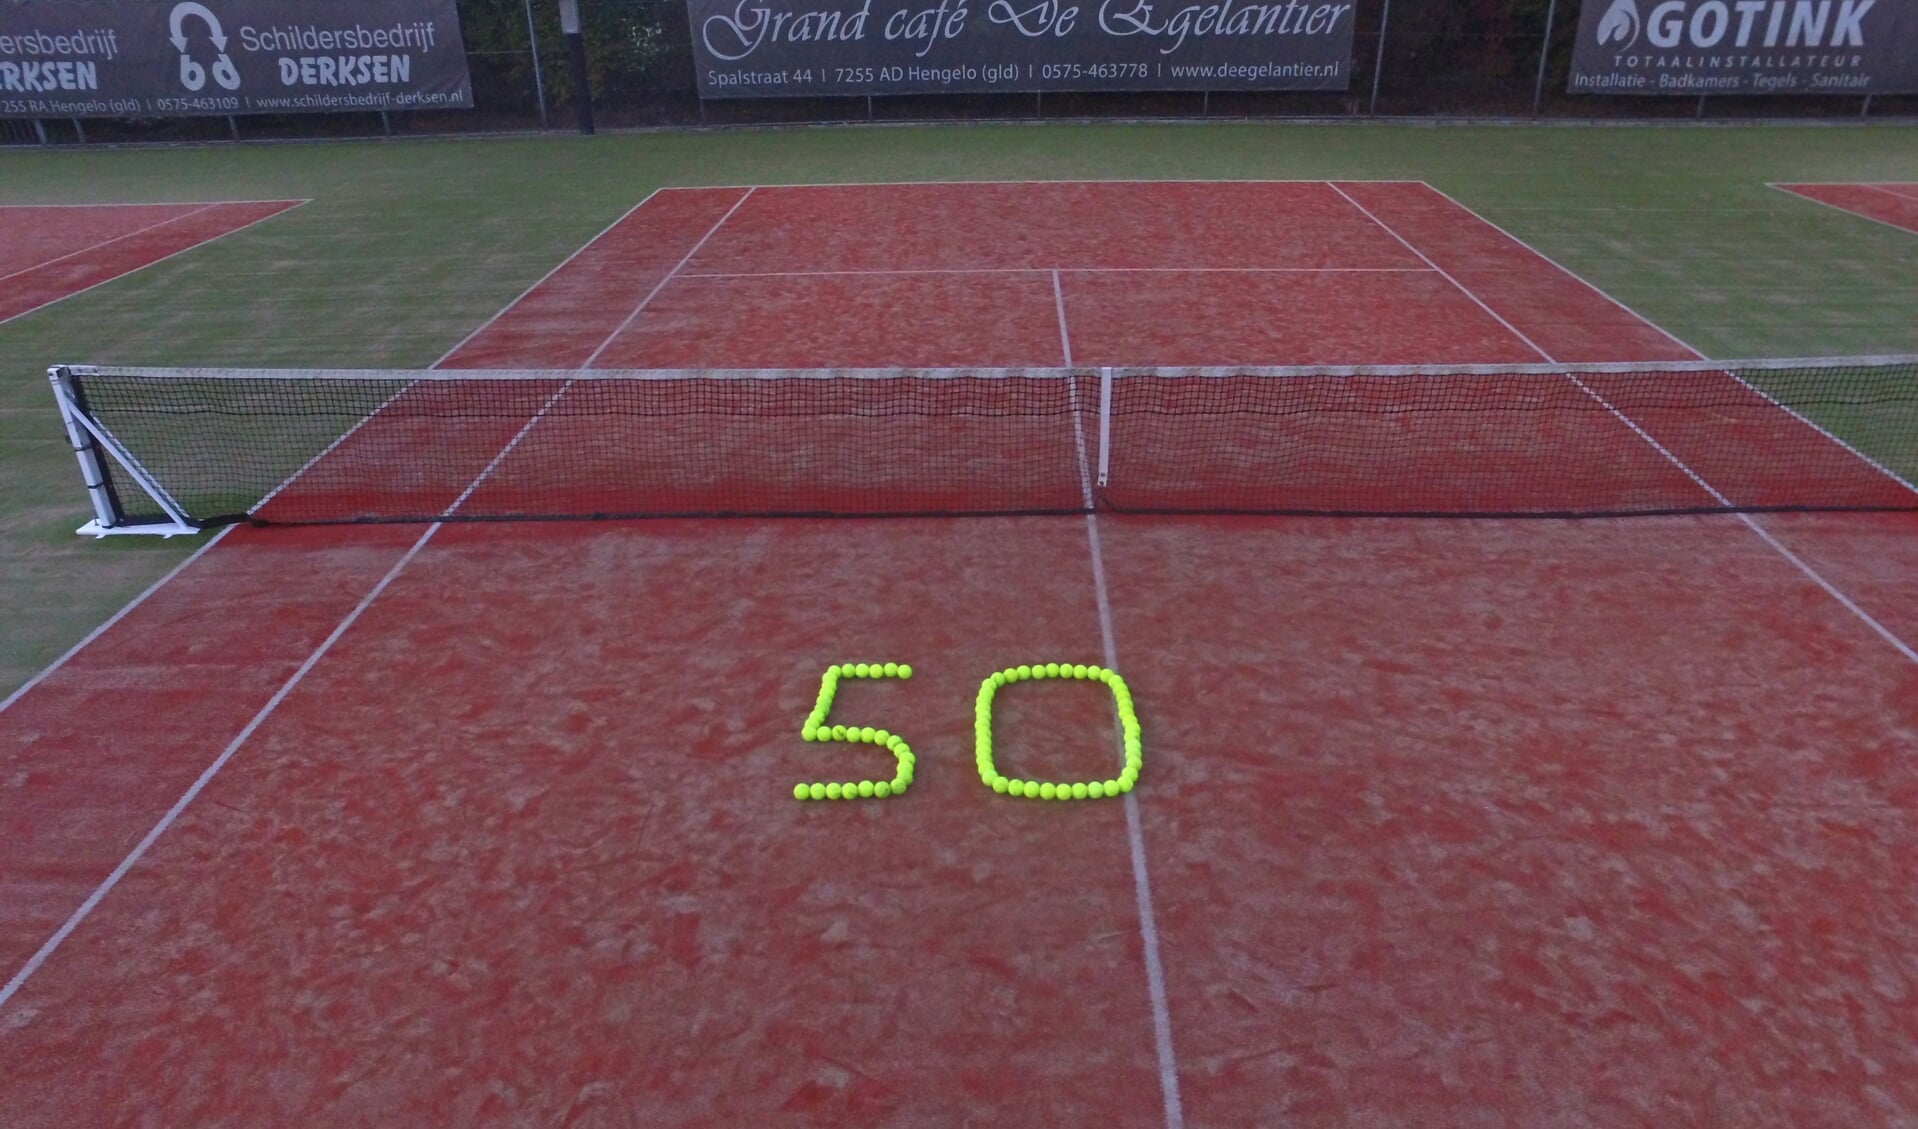 Lawn Tennis Club Het Elderink viert vijftigjarig bestaan. Foto: PR